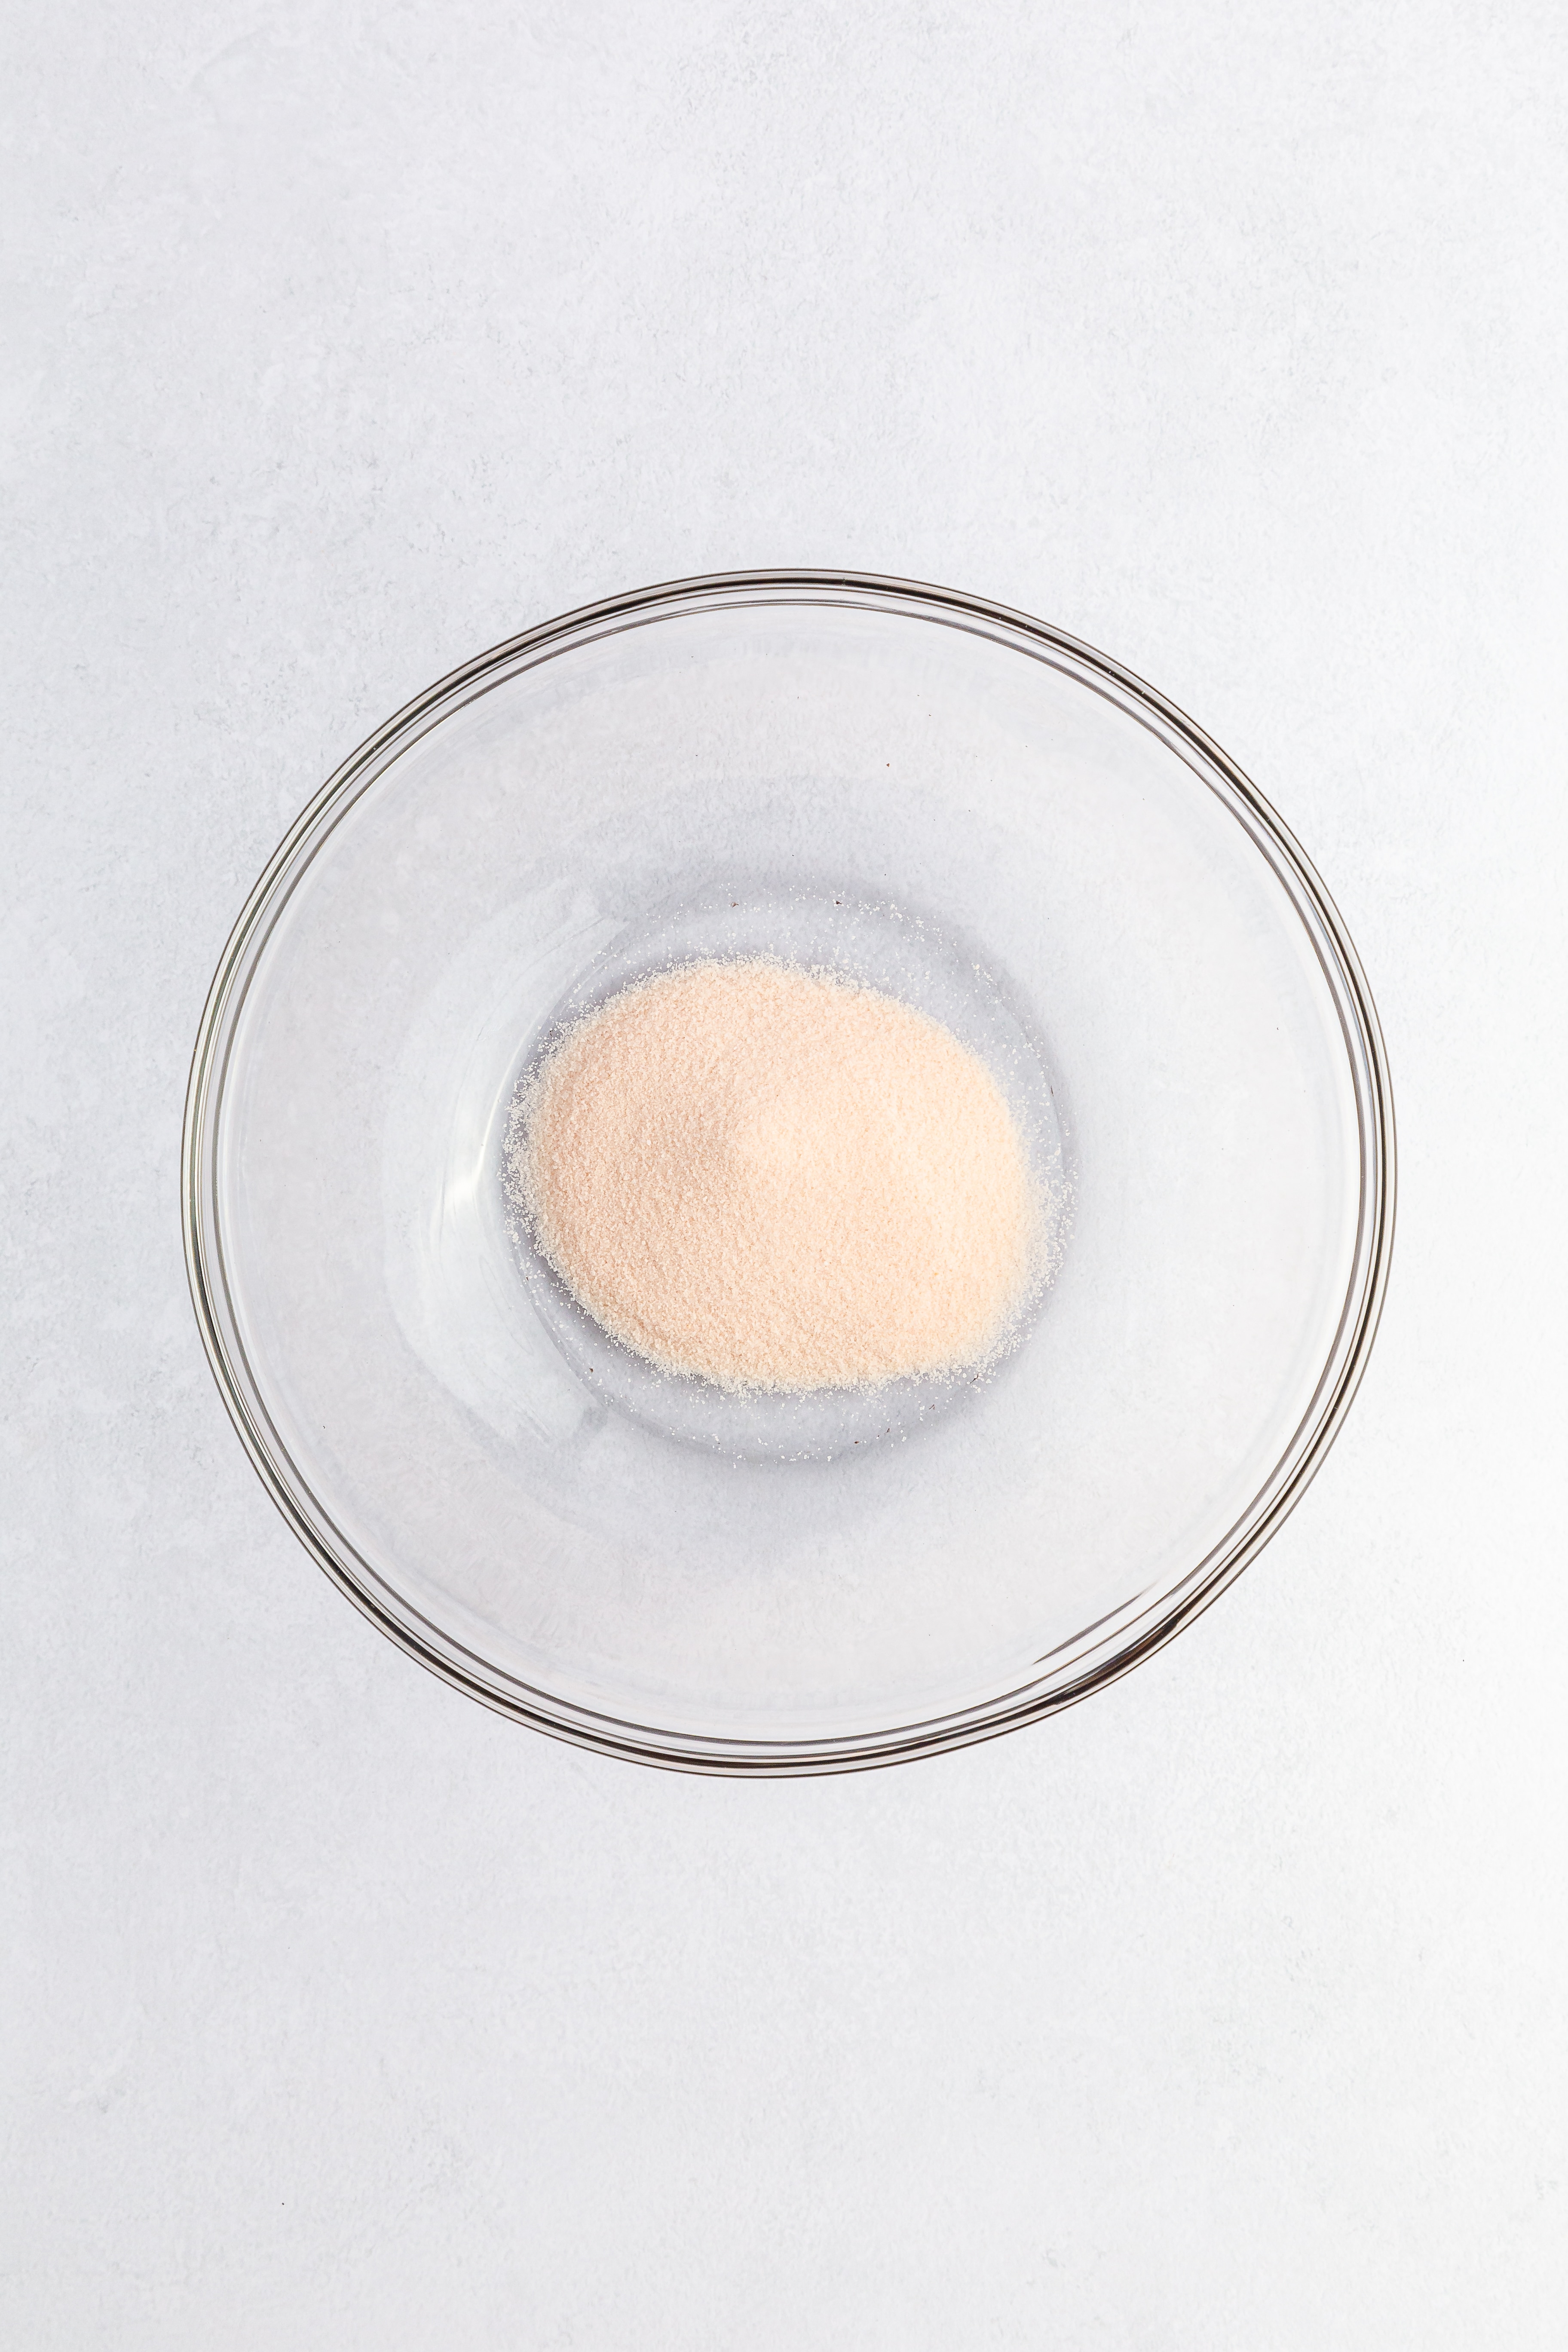 Orange Jell-O mix powder in a glass bowl